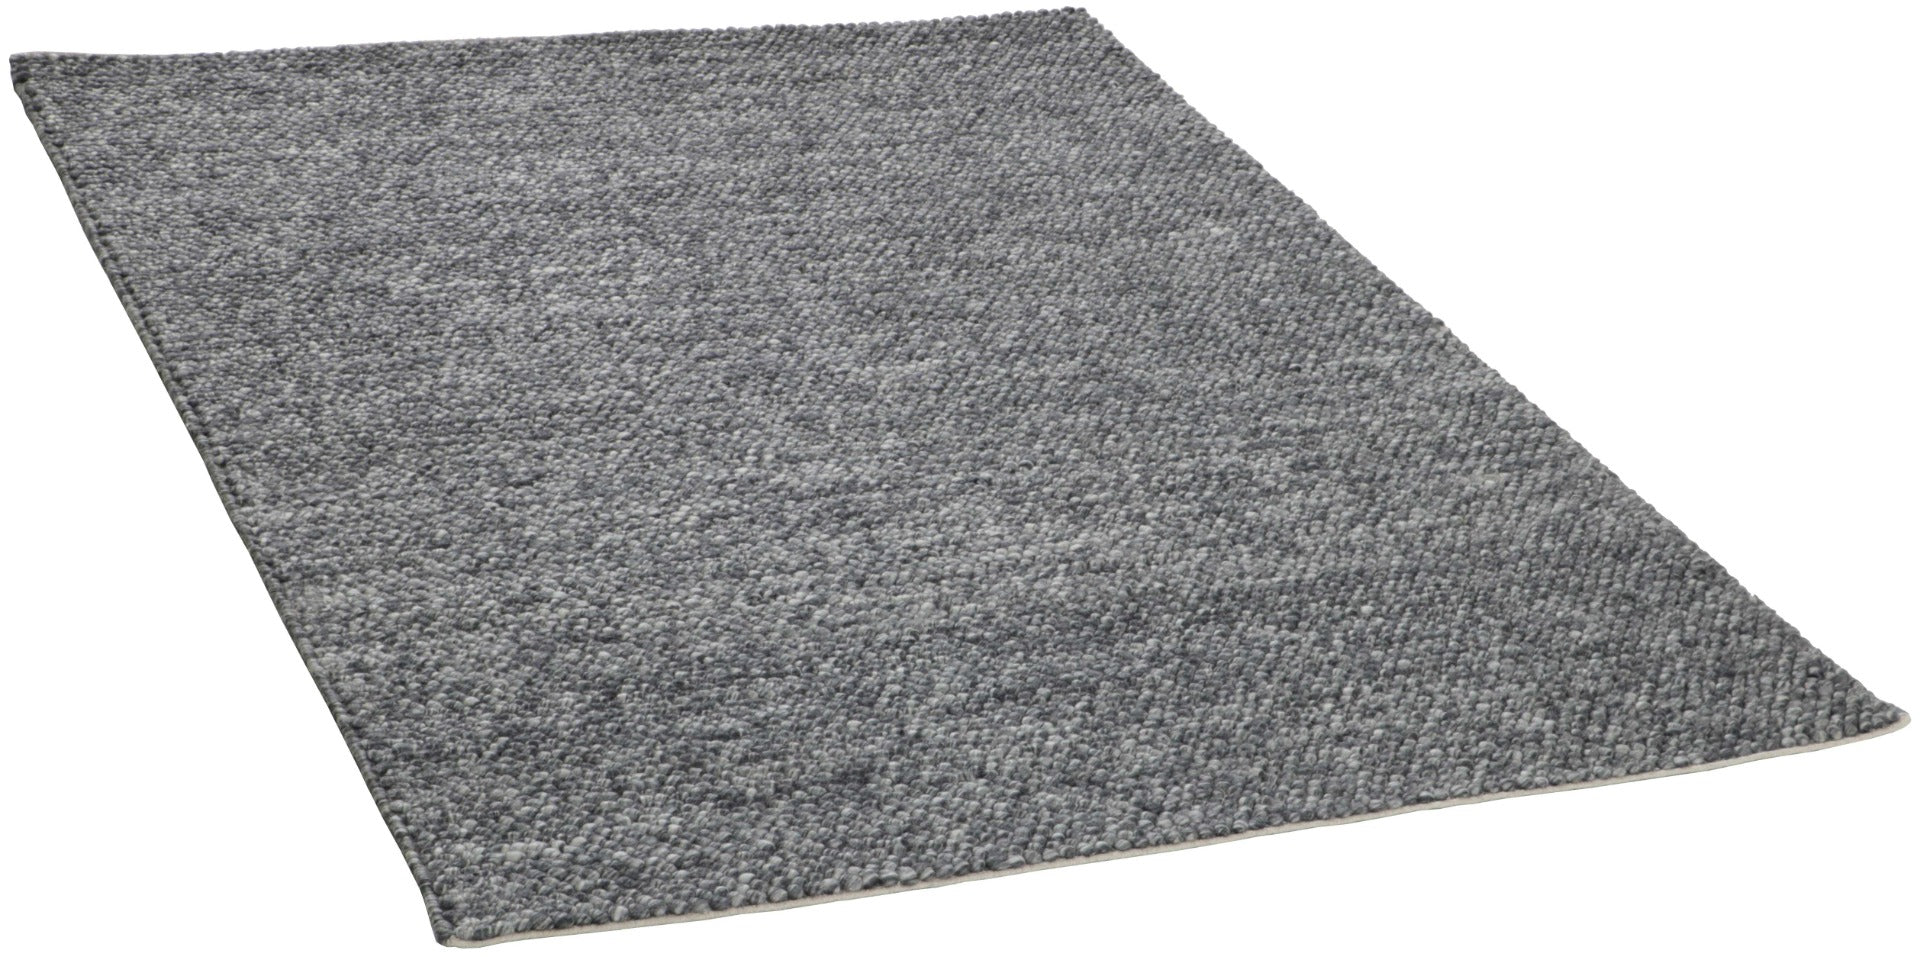 Large plain grey and black  rug
